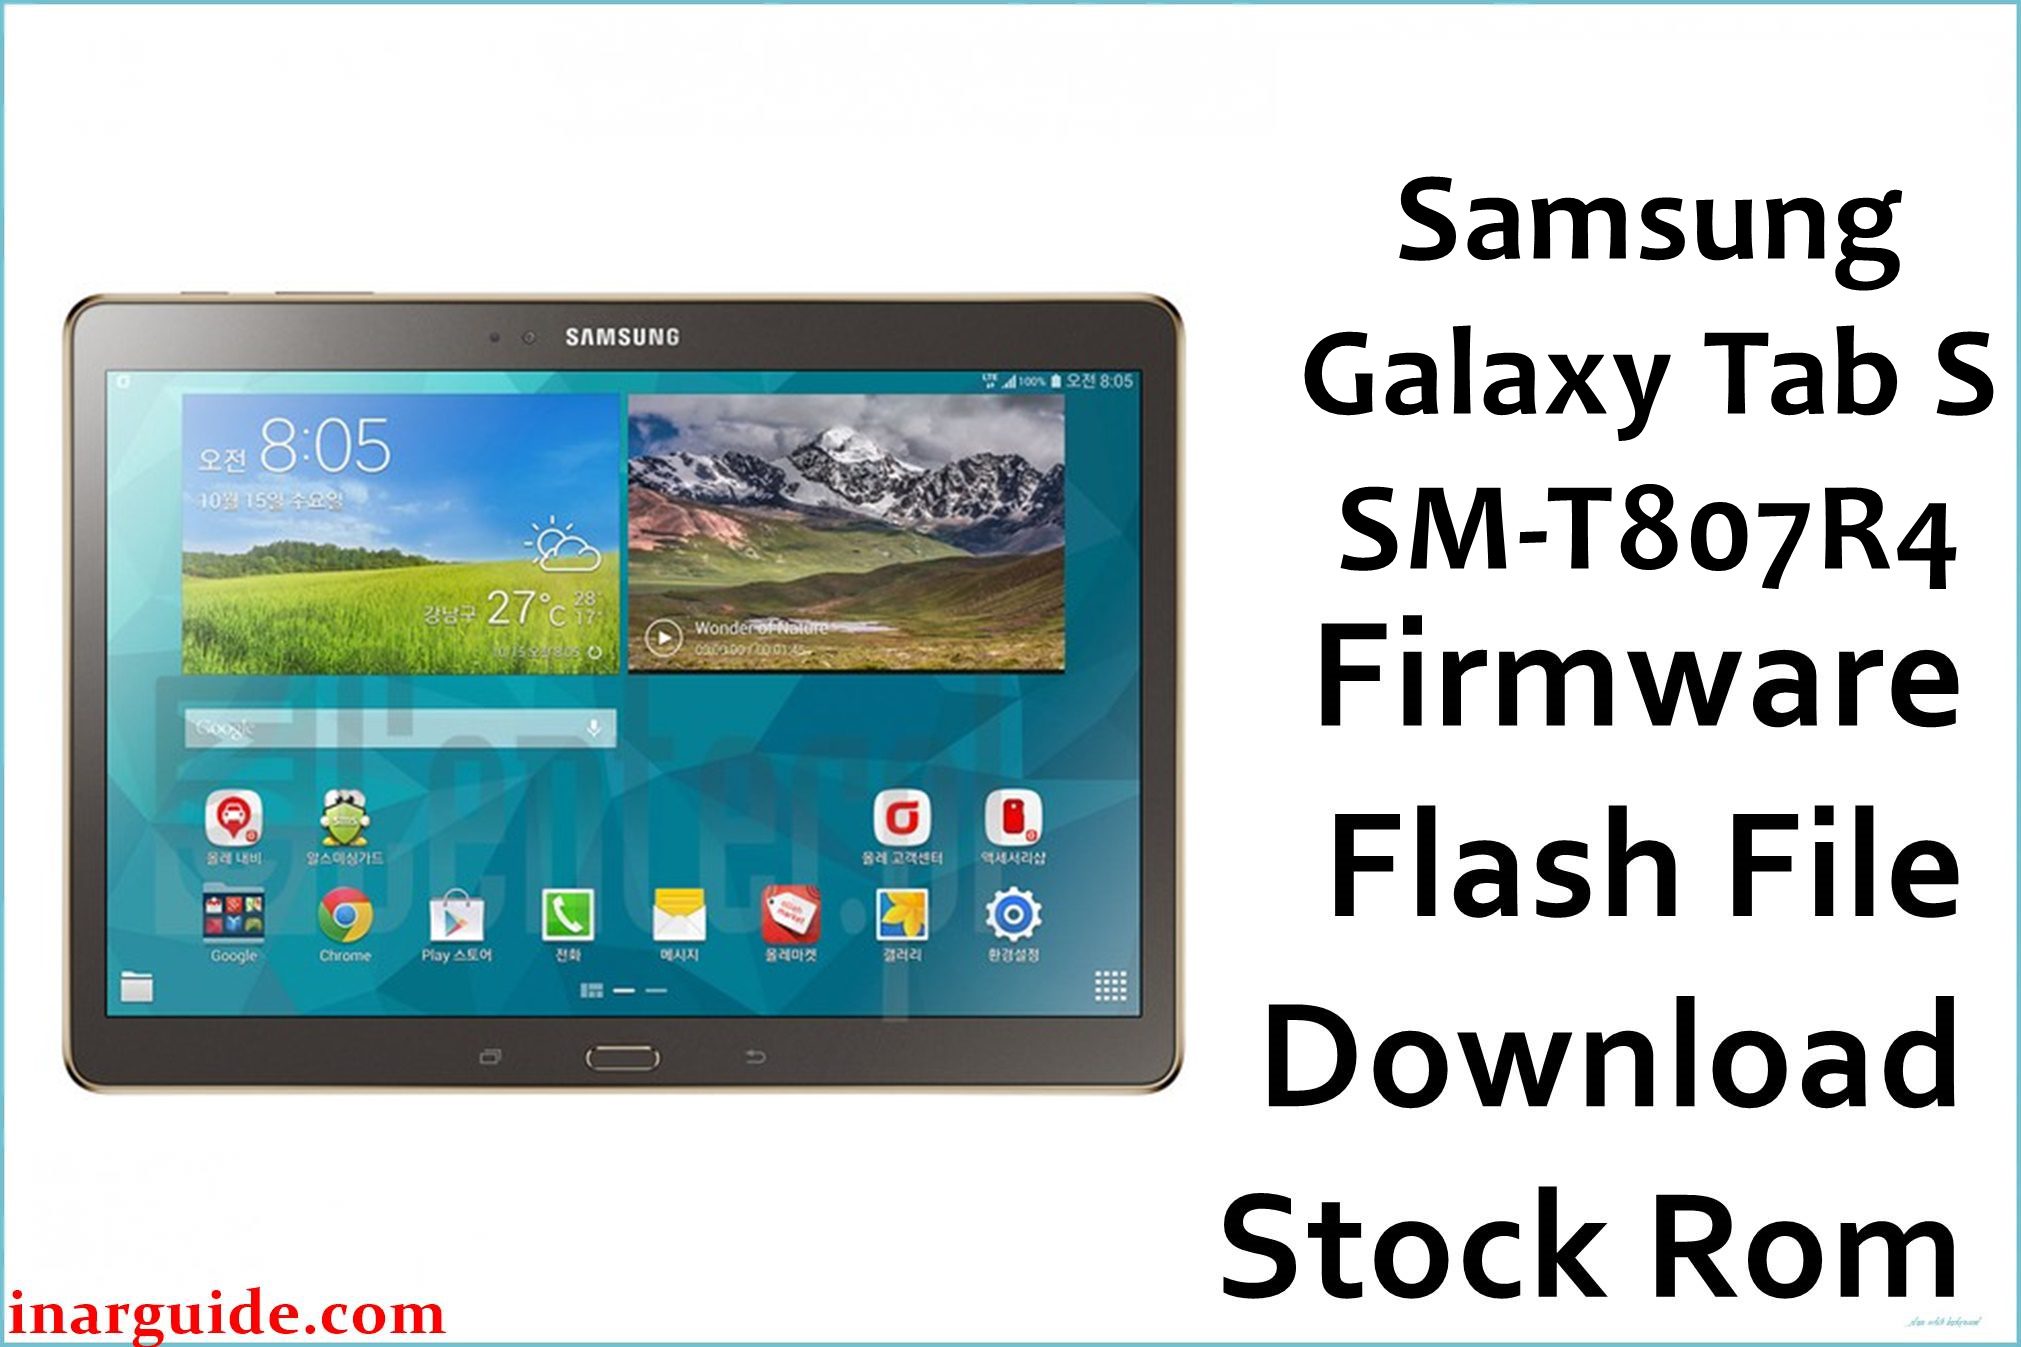 Samsung Galaxy Tab S SM T807R4